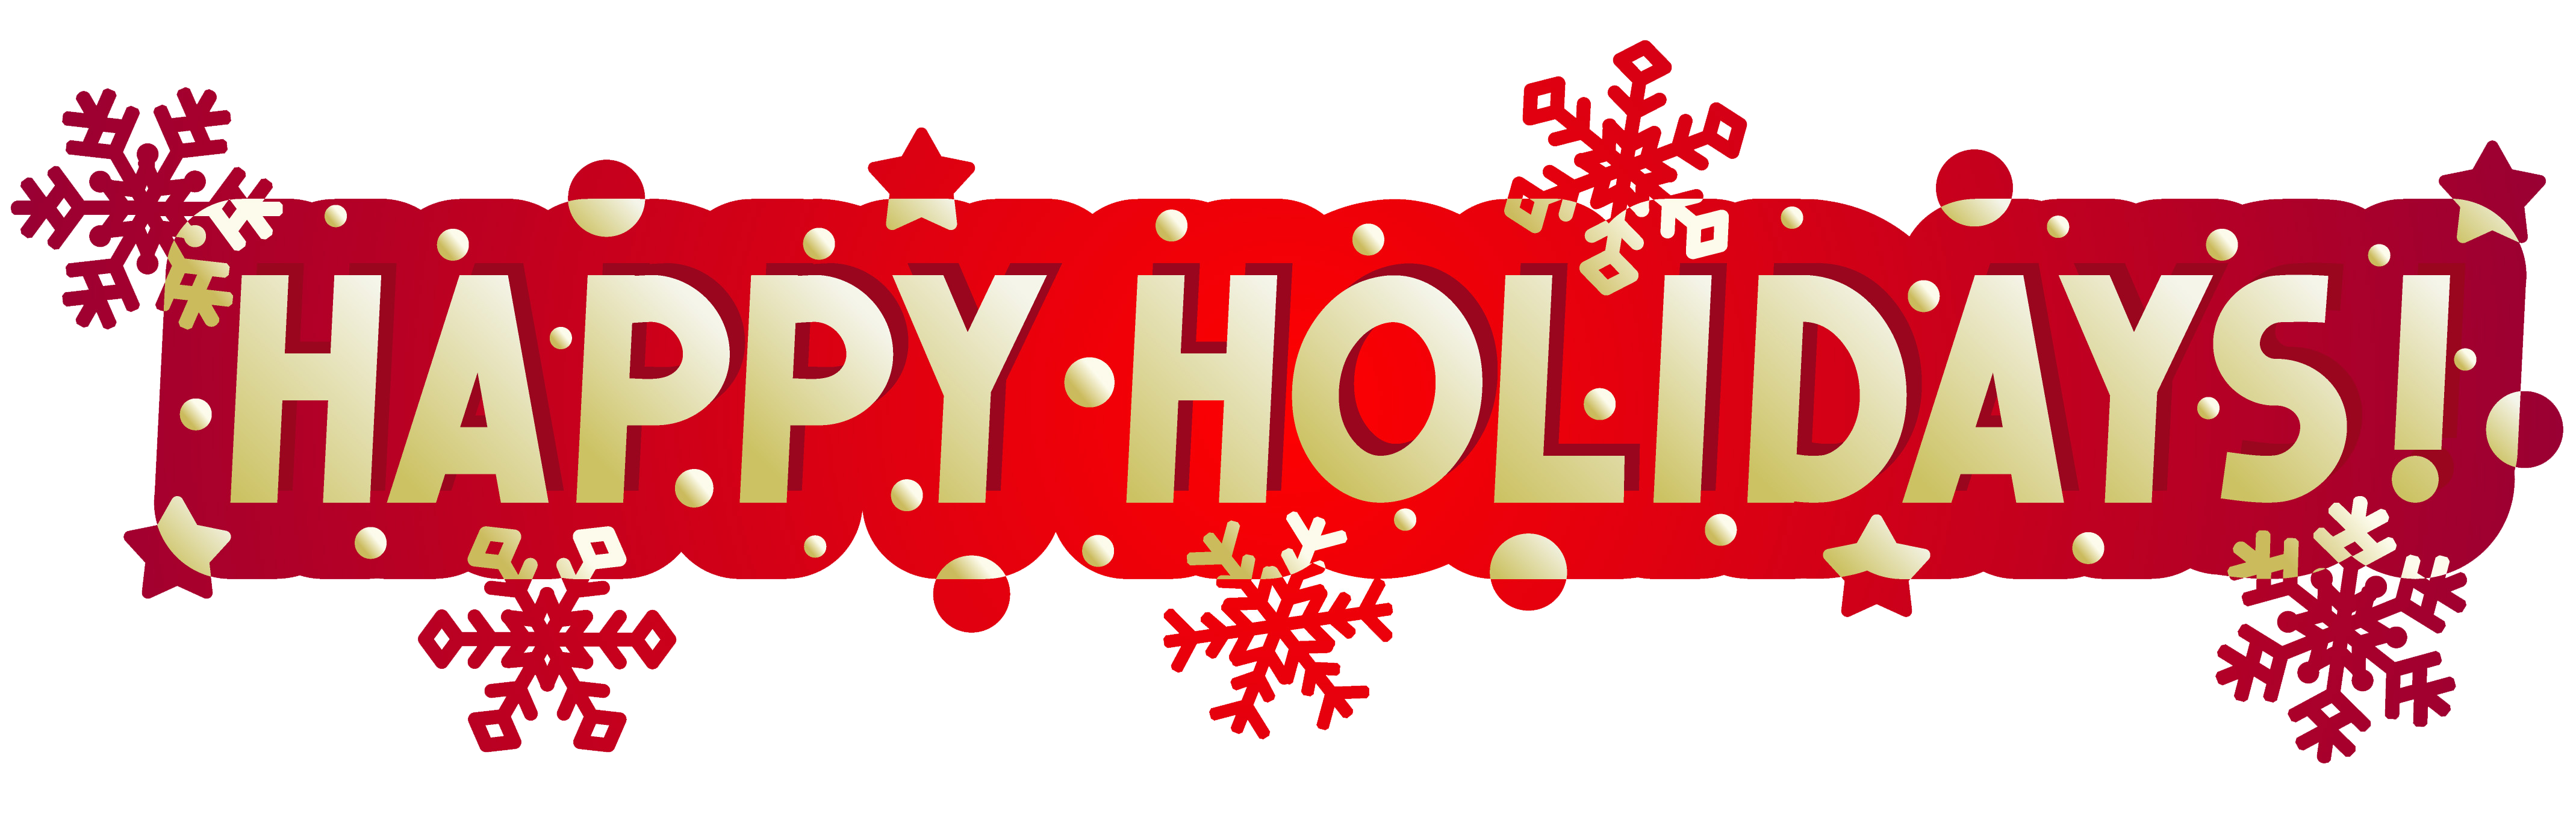 clip art happy holidays banner - photo #38